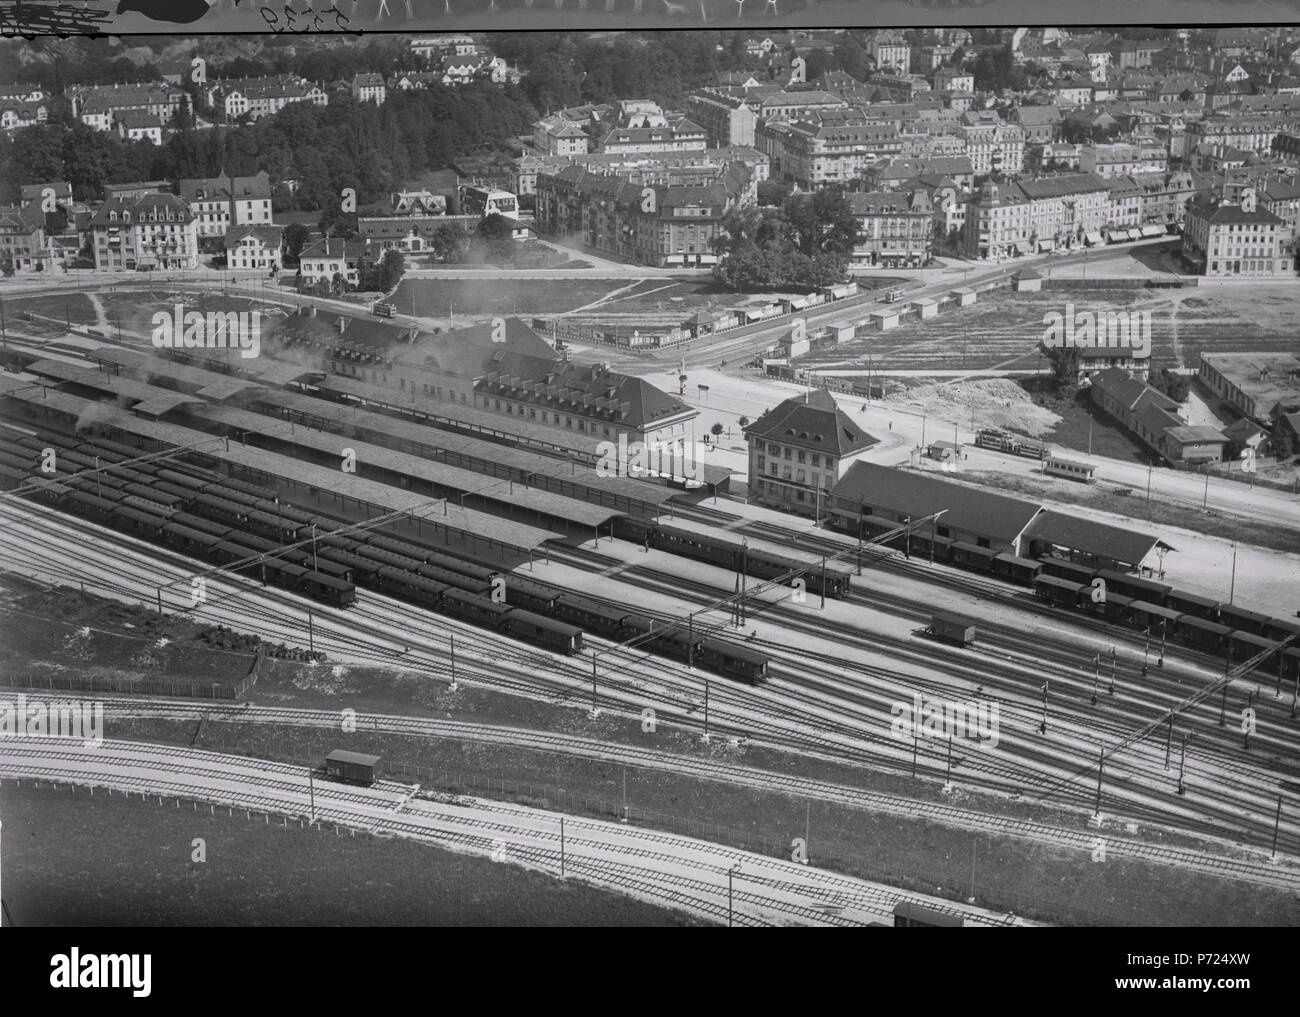 49 ETH-BIB-Biel, Bahnhof, Dampflokomotiven aus 100 m-Inlandflüge-LBS MH01-005539 Stock Photo